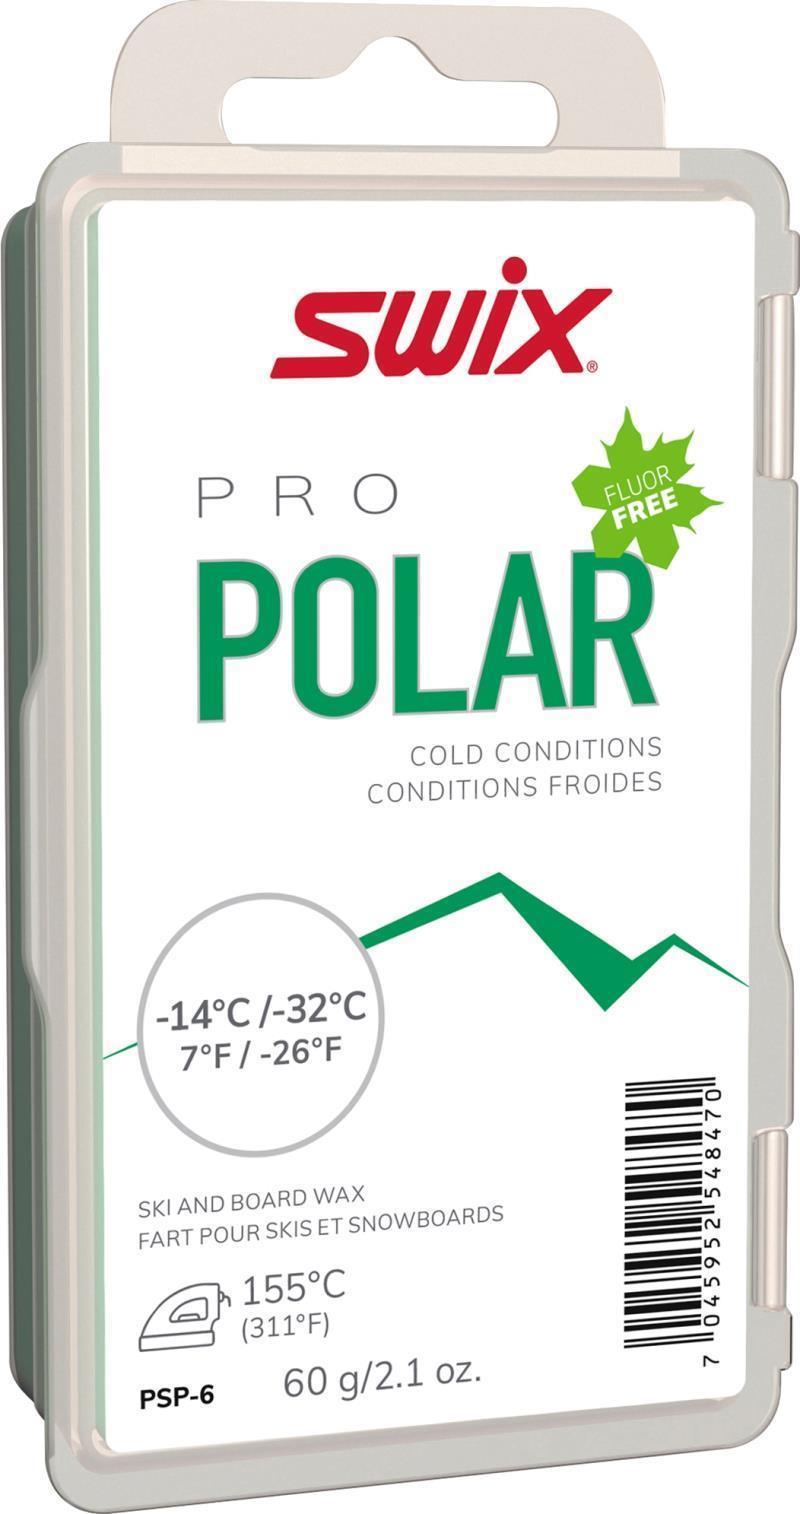 PS Polar Wax, -14C to -32C, 60g